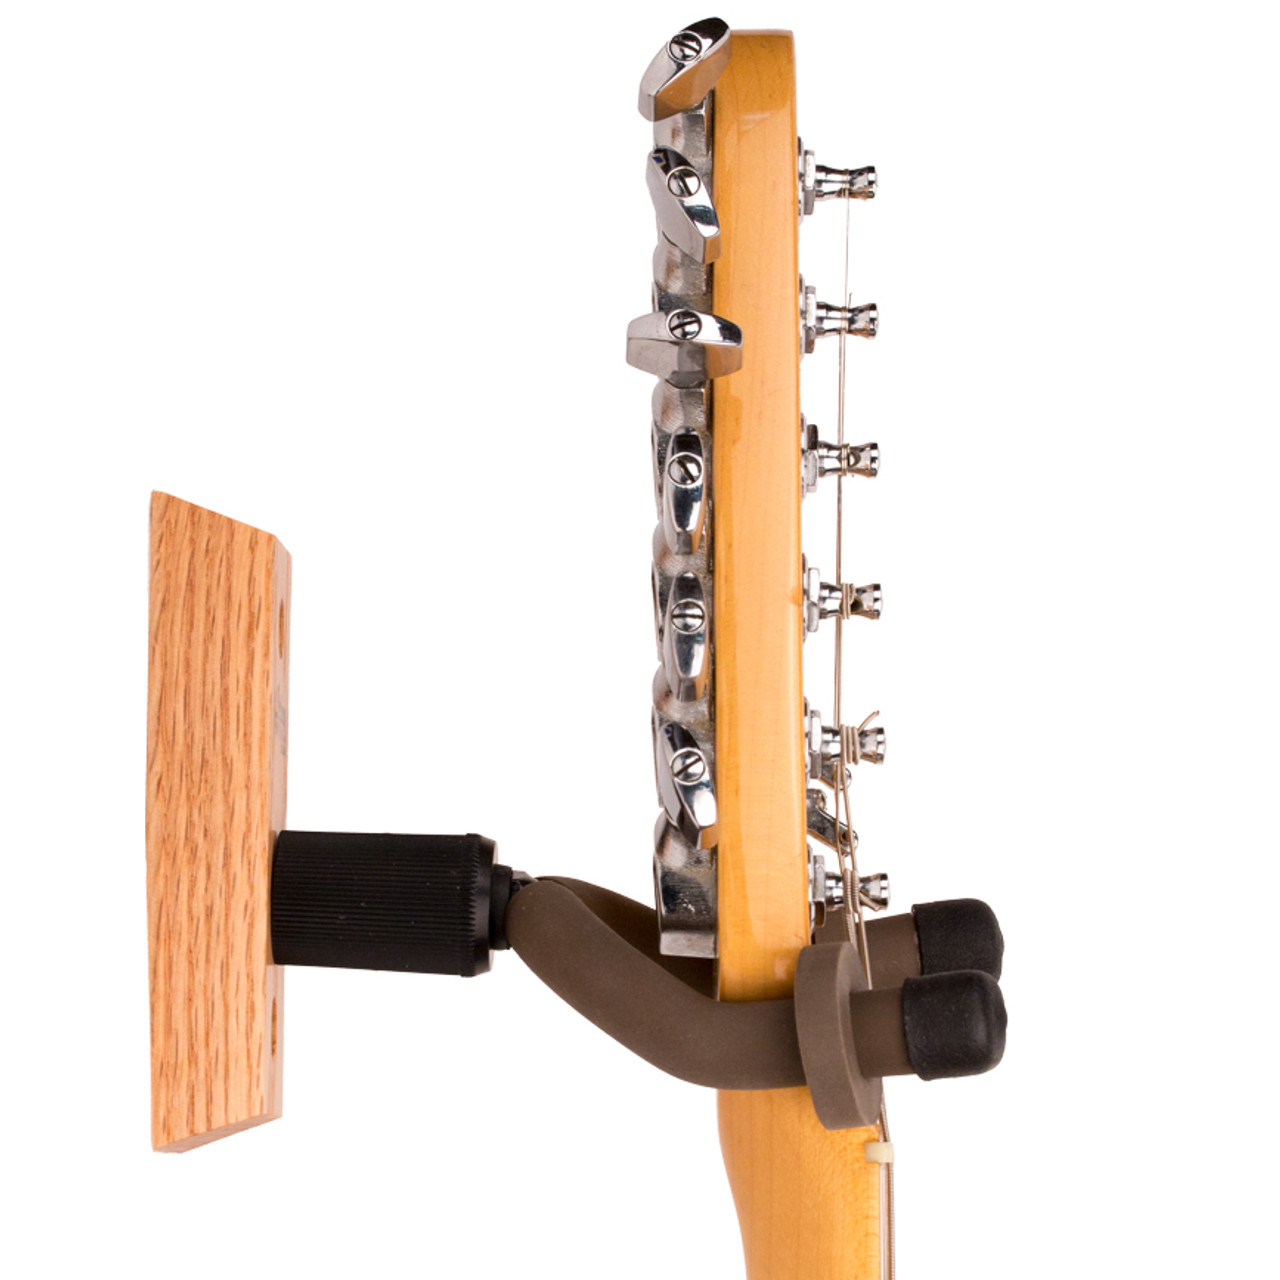 Guitar Hanger Hook Holder : For Wall Mount Display : Fits for many sizes of  Guitars, Bass, Mandolin, Banjo - HK eCart! India's Wholesale Shop